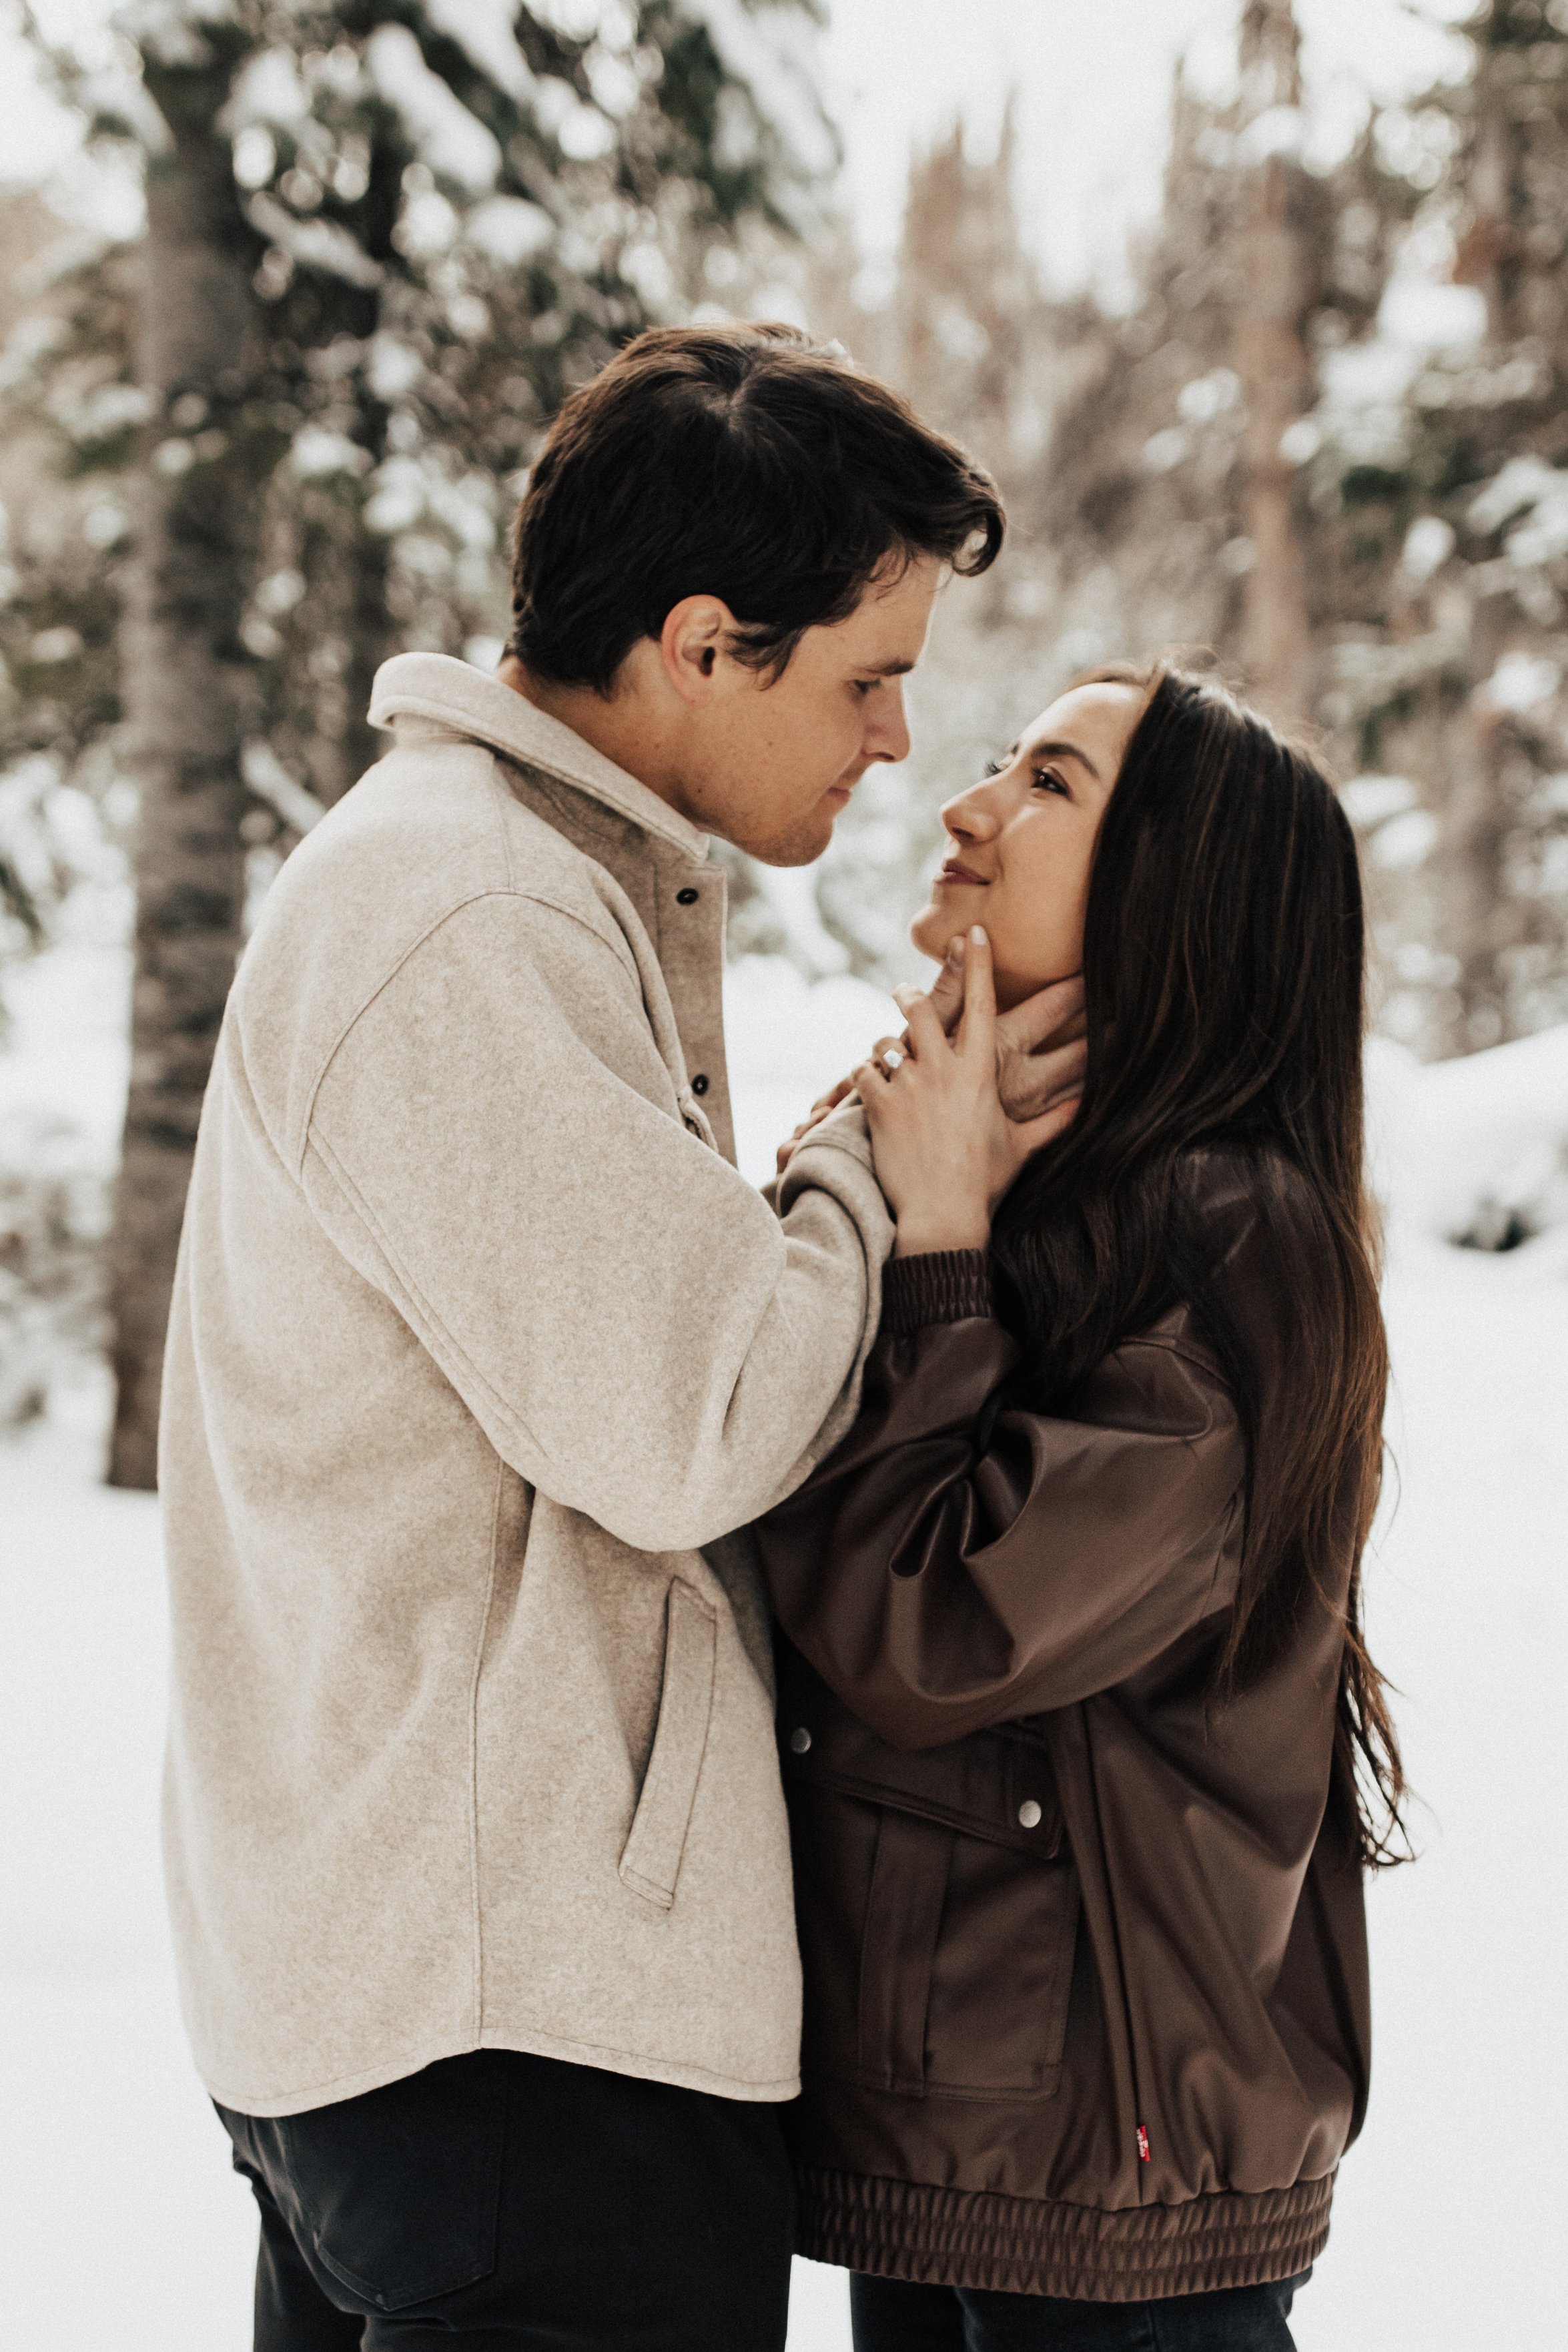 romantic-surprise-winter-proposal-55.jpg